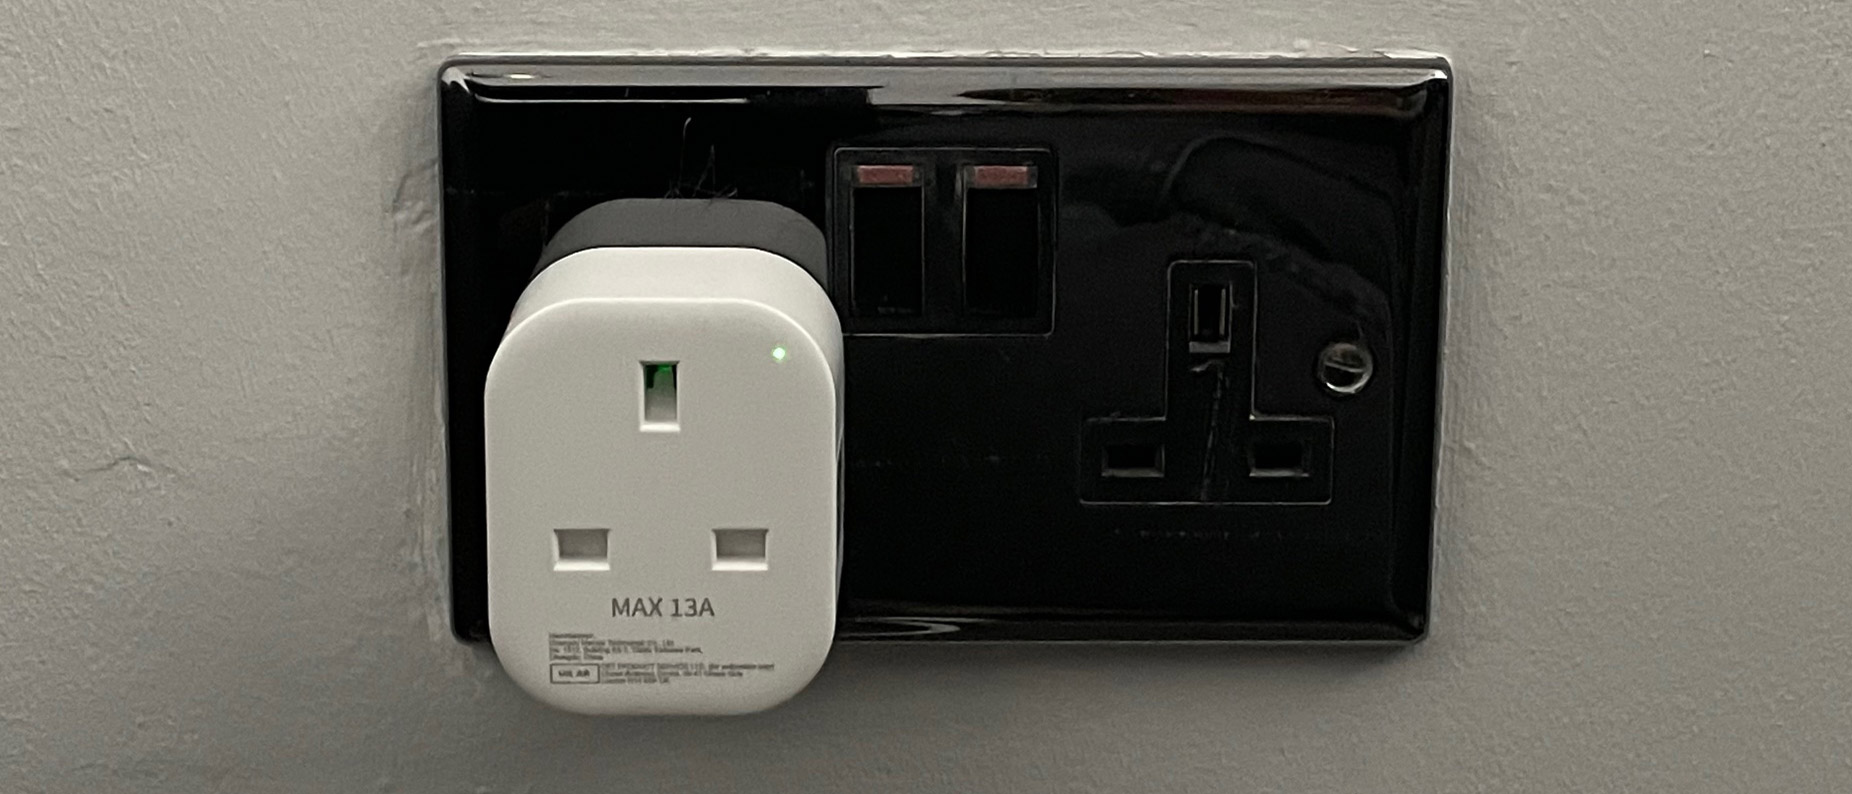 Meross Wi-Fi Smart Plug review: A low-cost way into HomeKit automation